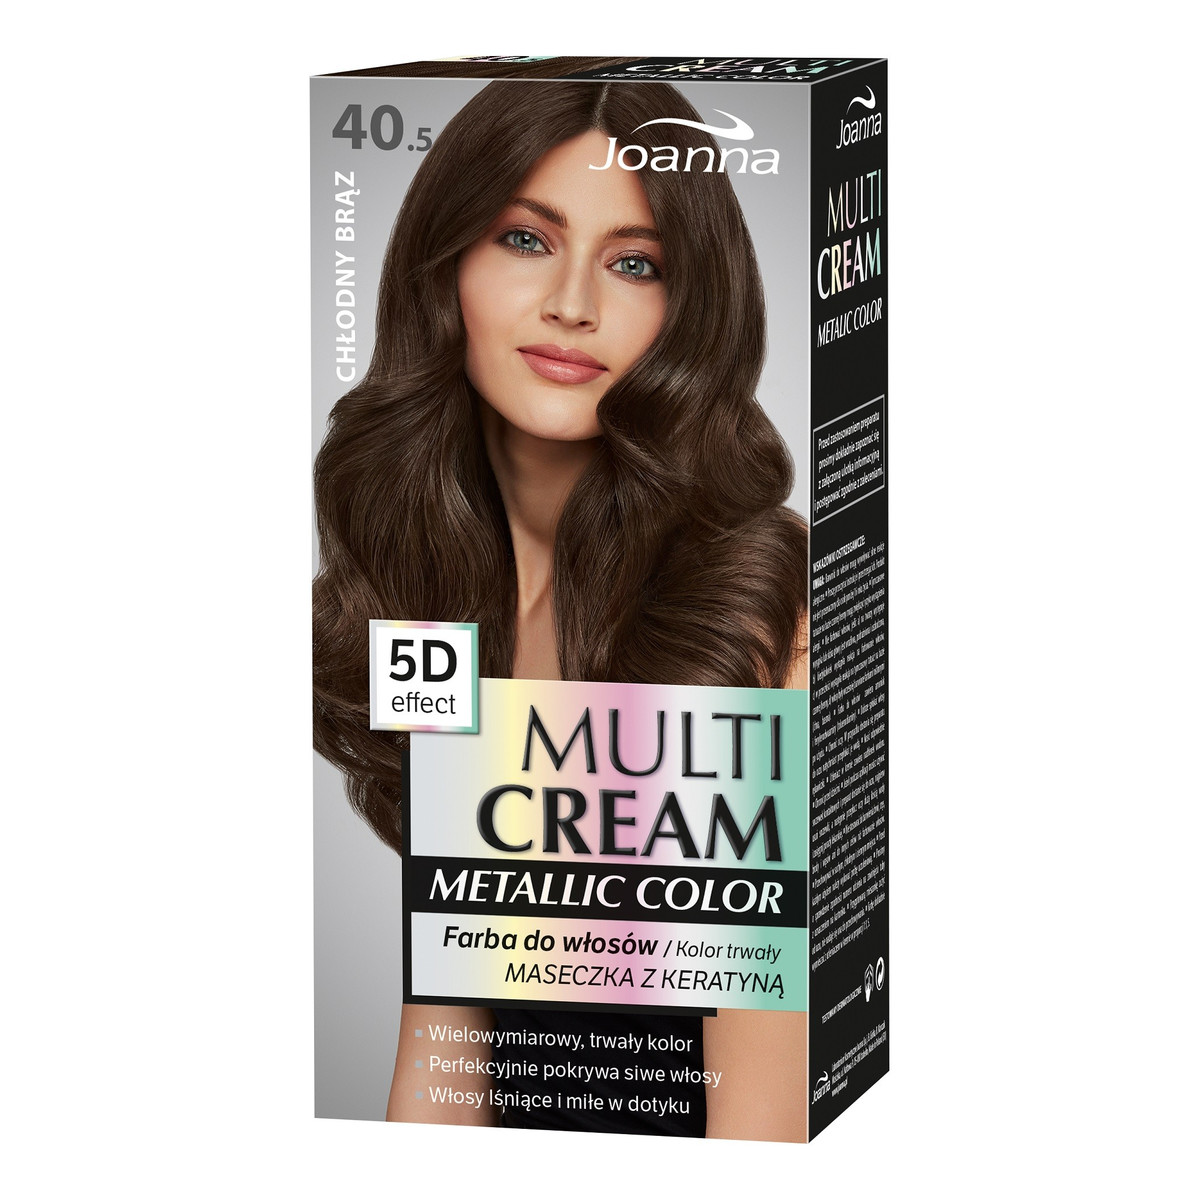 Joanna Multi Cream Metallic Color Farba do włosów